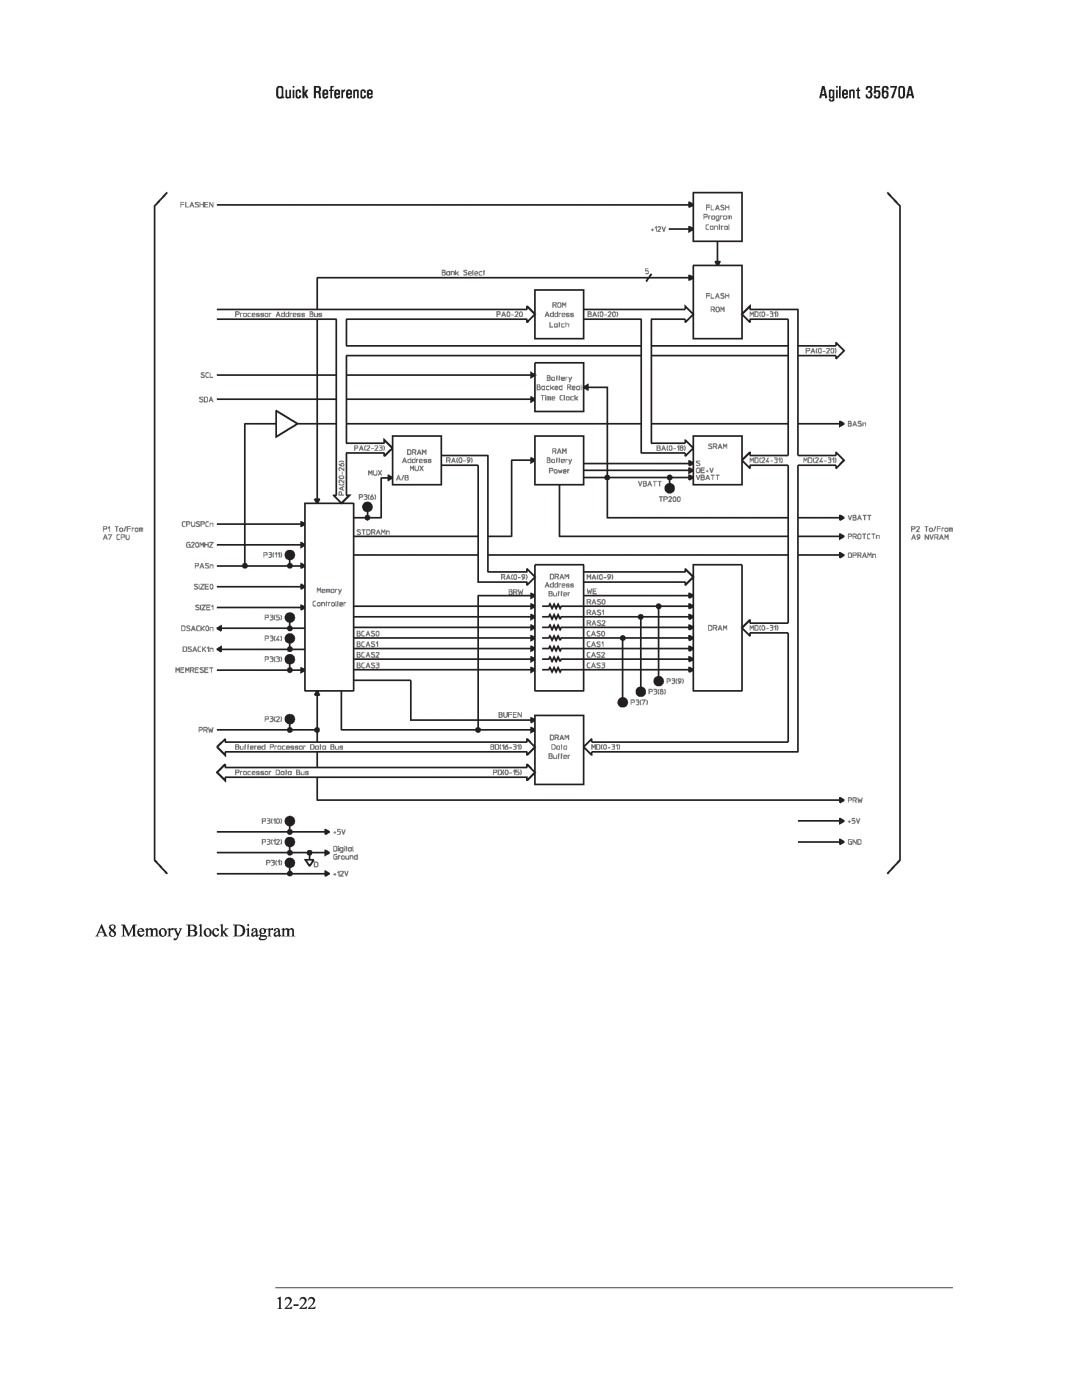 Agilent Technologies 35670-90066 manual Quick Reference, A8 Memory Block Diagram, Agilent 35670A 